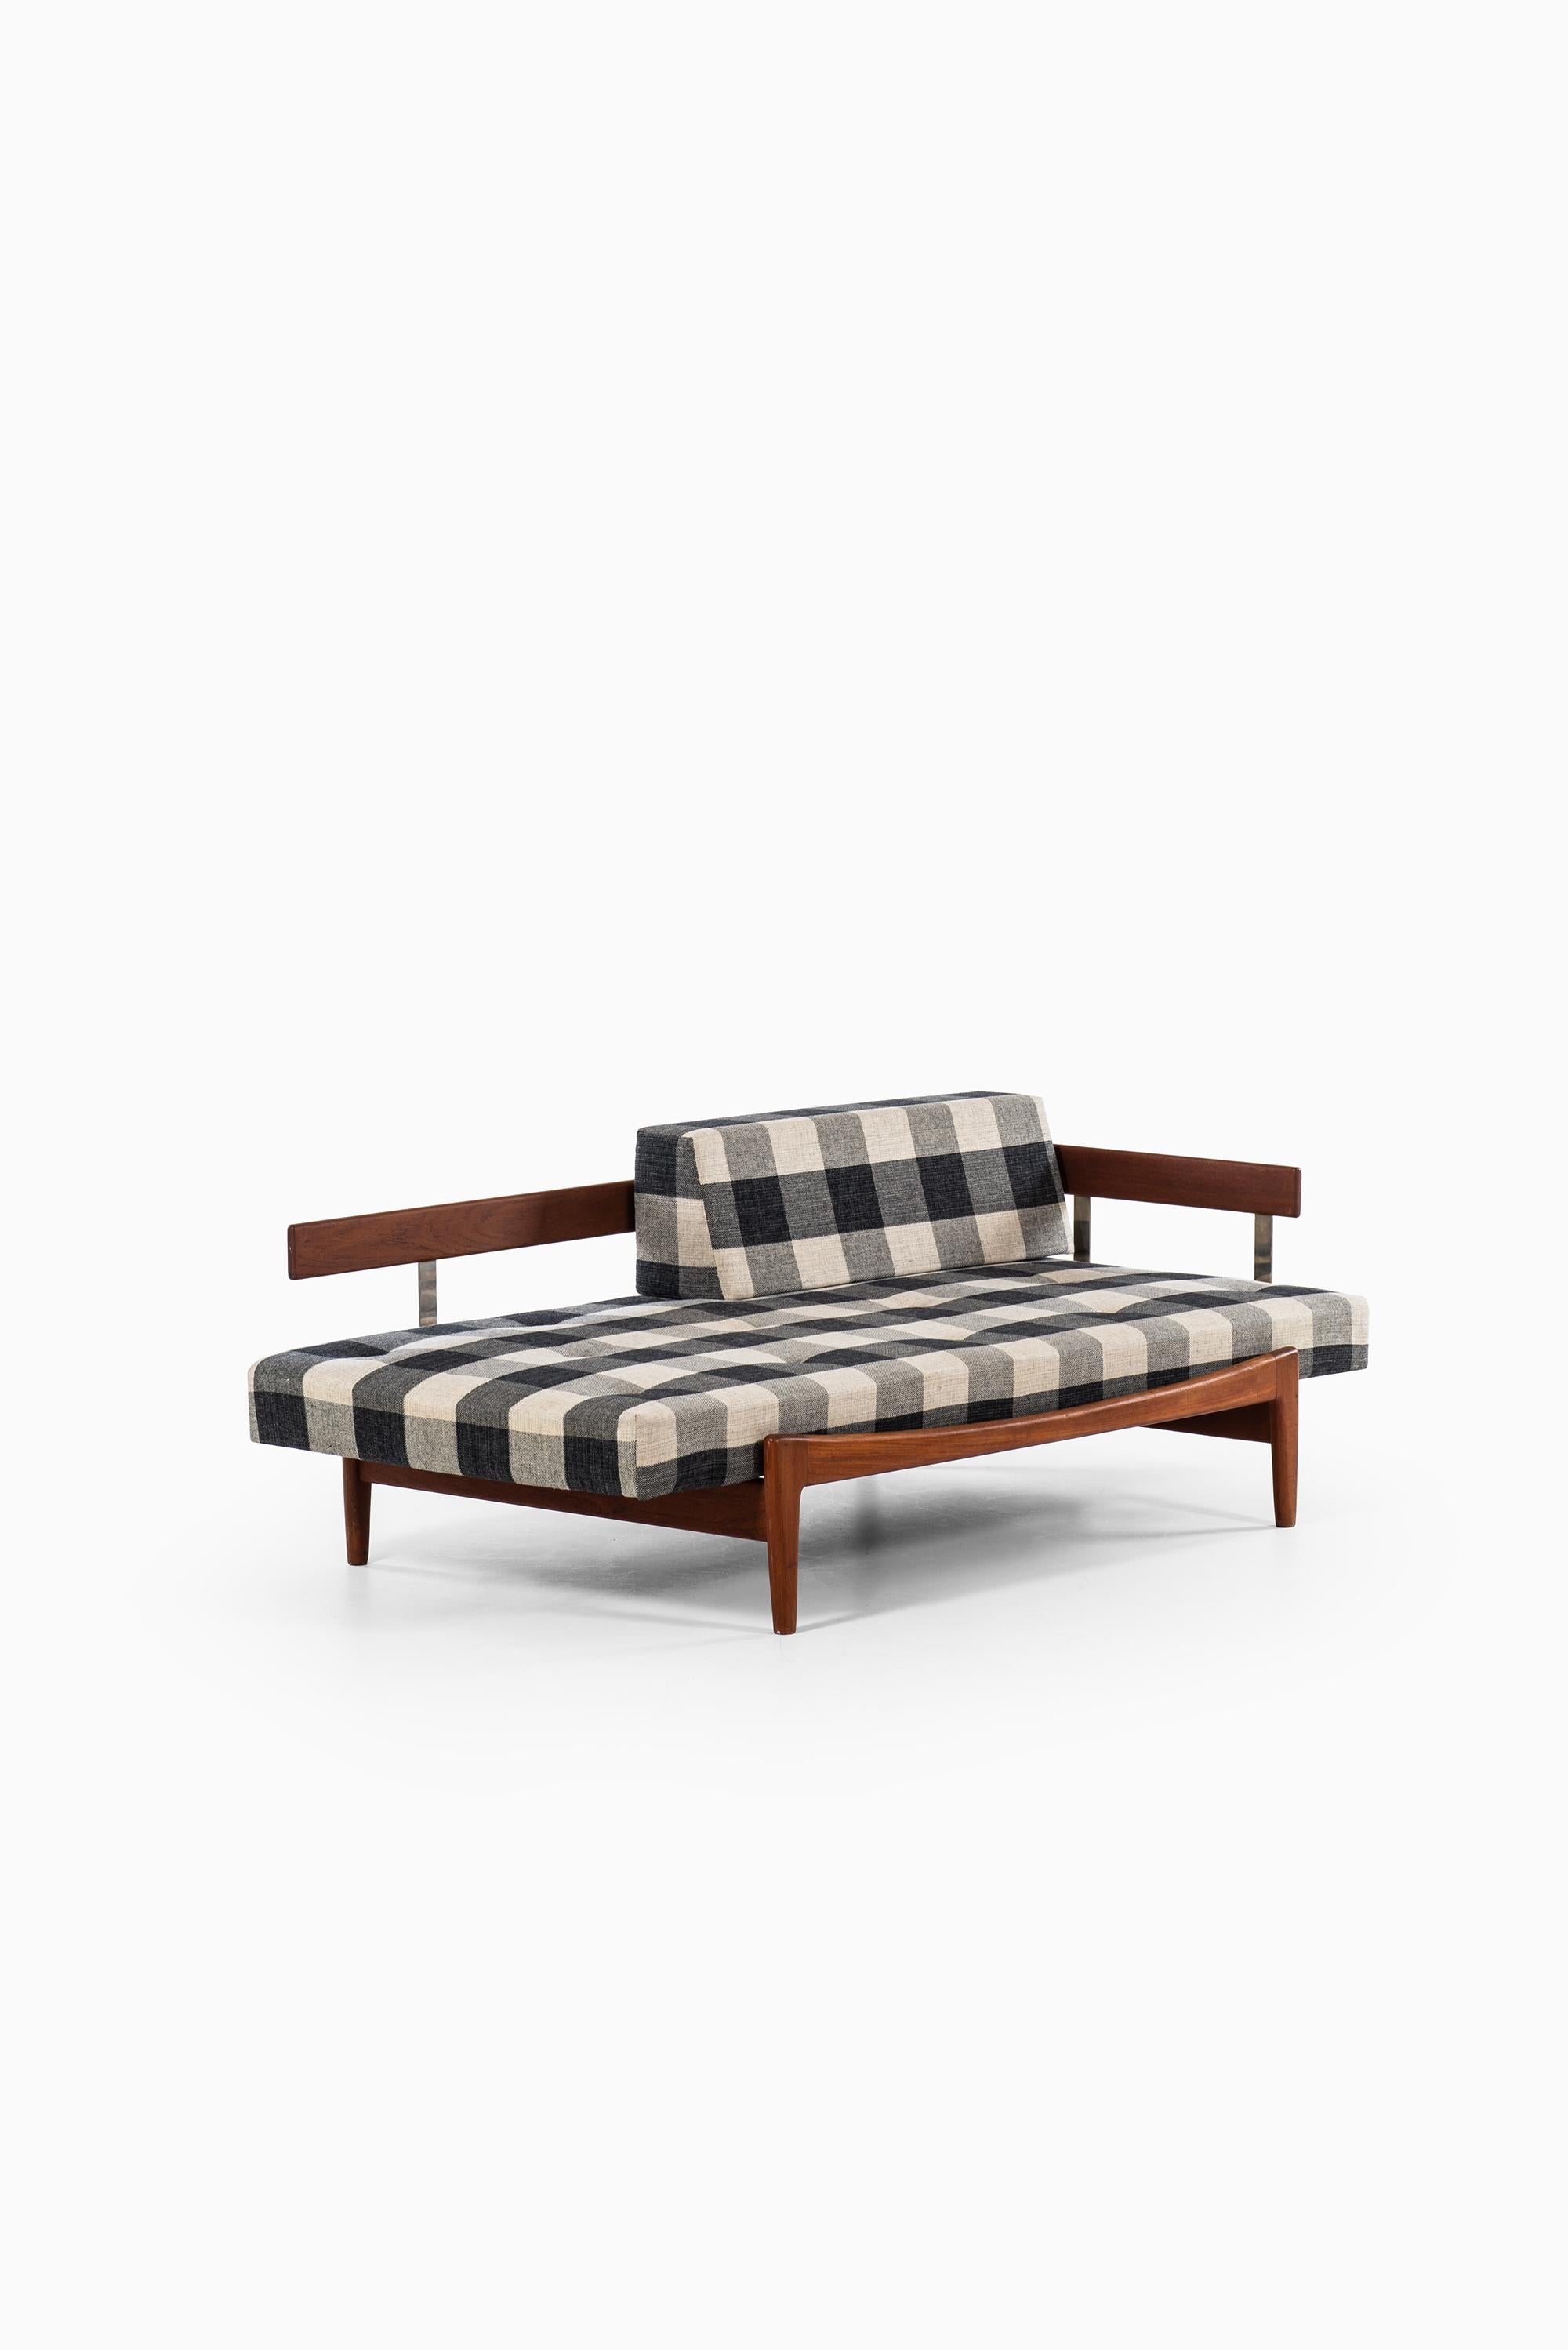 Ib Kofod-Larsen Sofa / Daybed by Seffle Möbelfabrik in Sweden 2